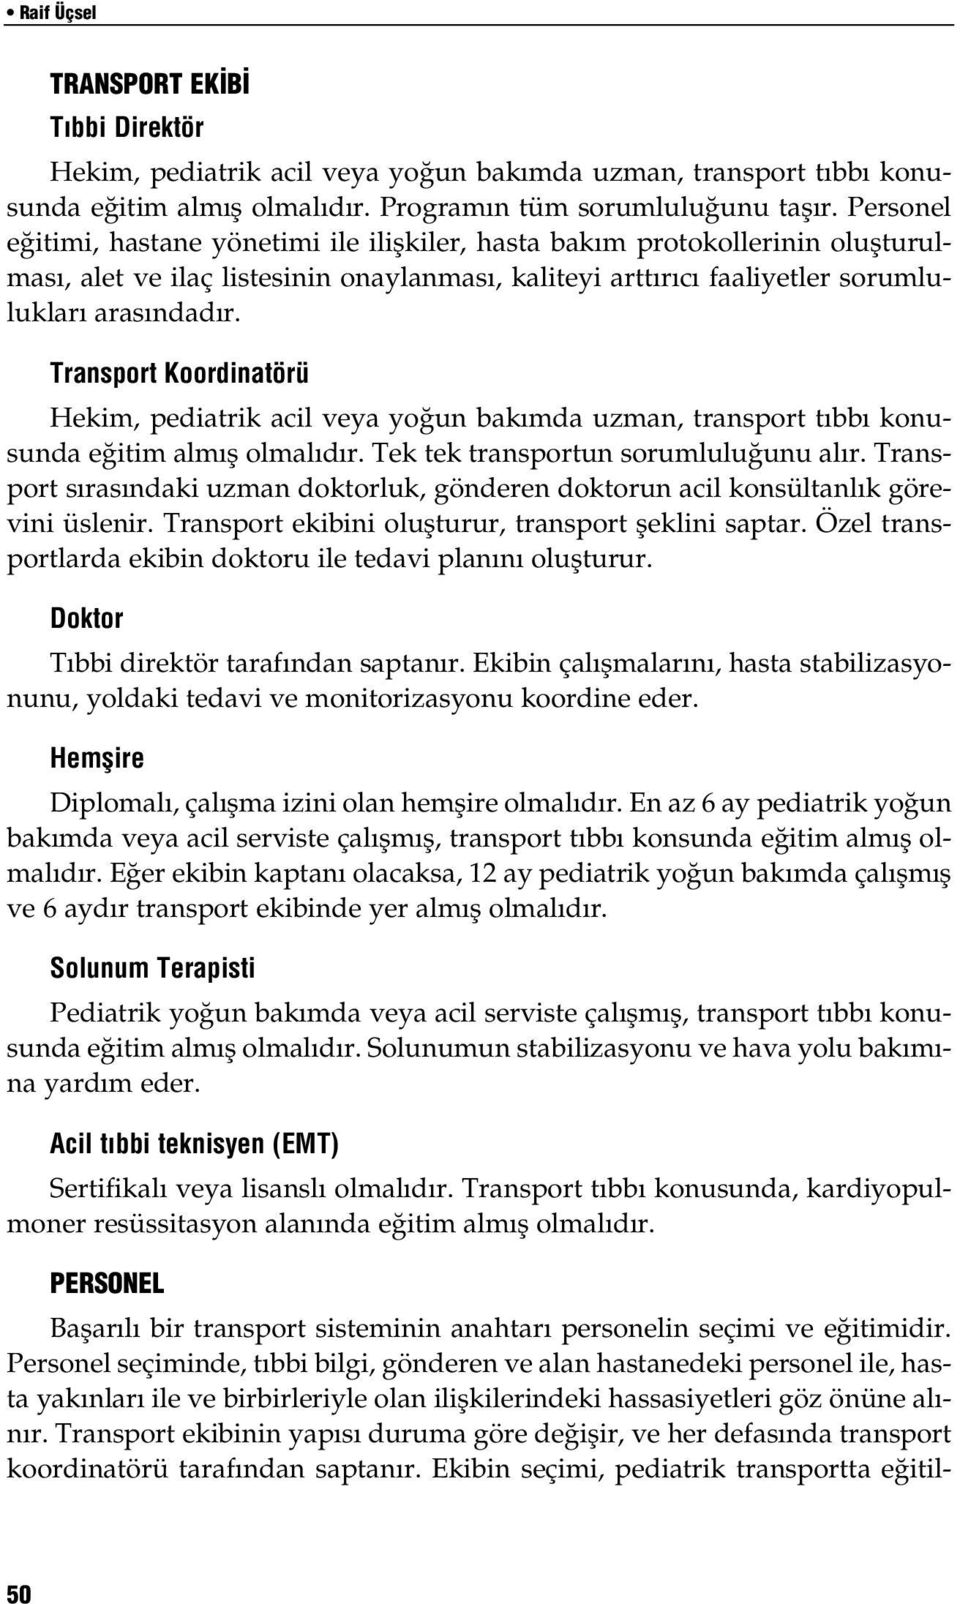 Transport. Doç. Dr. Raif Üçsel - PDF Free Download